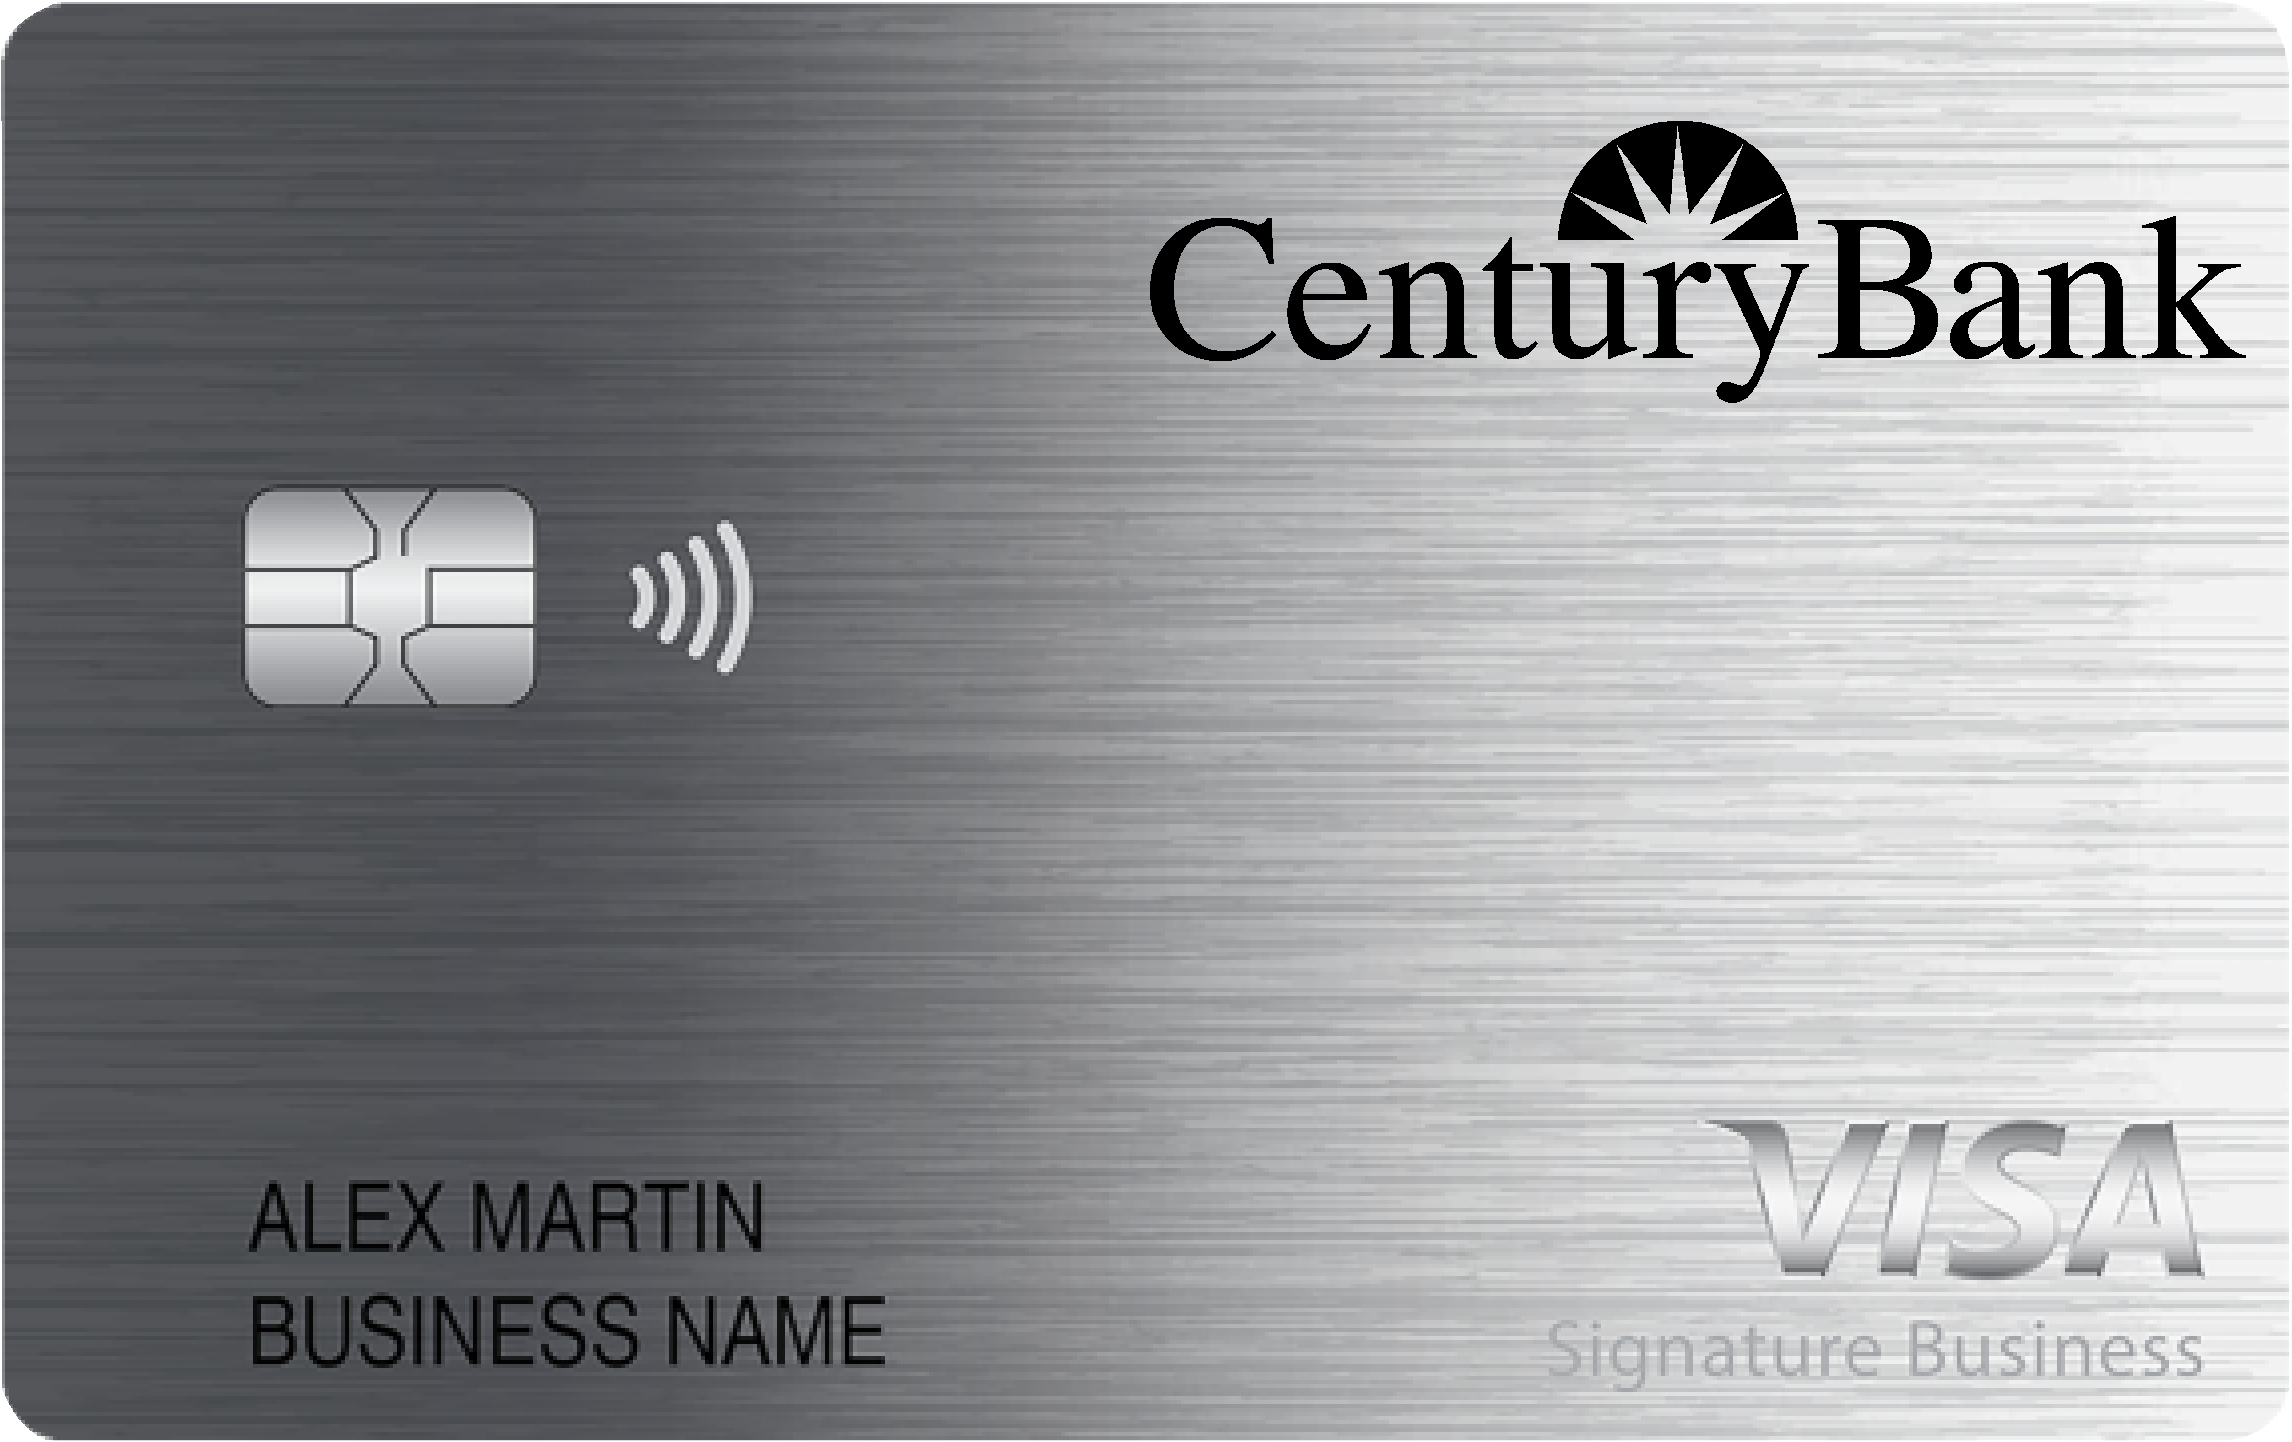 Century Bank Of Kentucky Smart Business Rewards Card